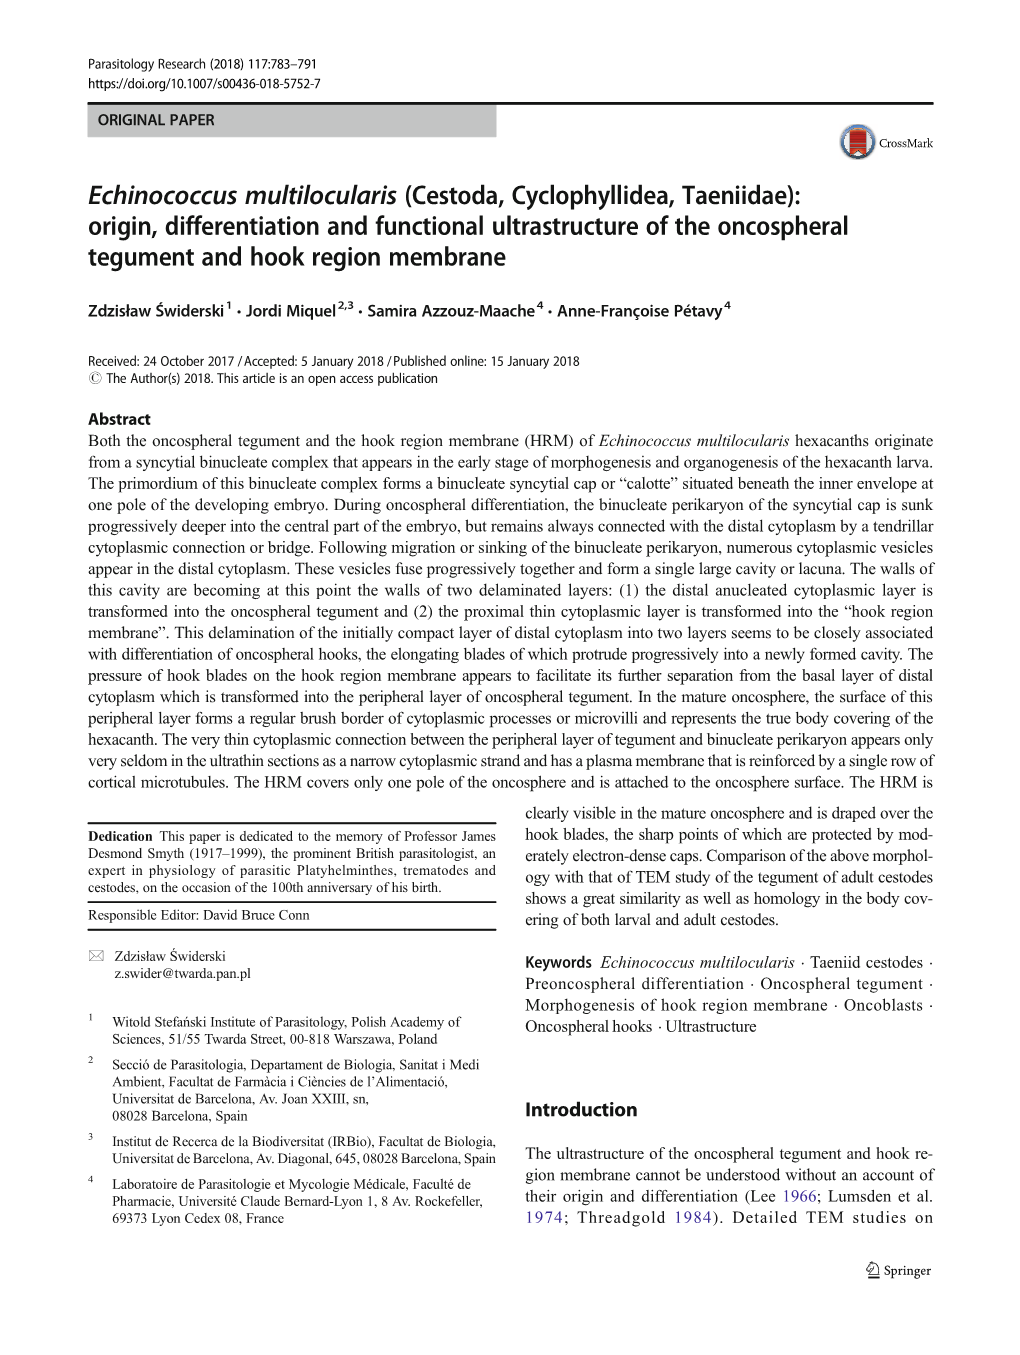 Echinococcus Multilocularis (Cestoda, Cyclophyllidea, Taeniidae)